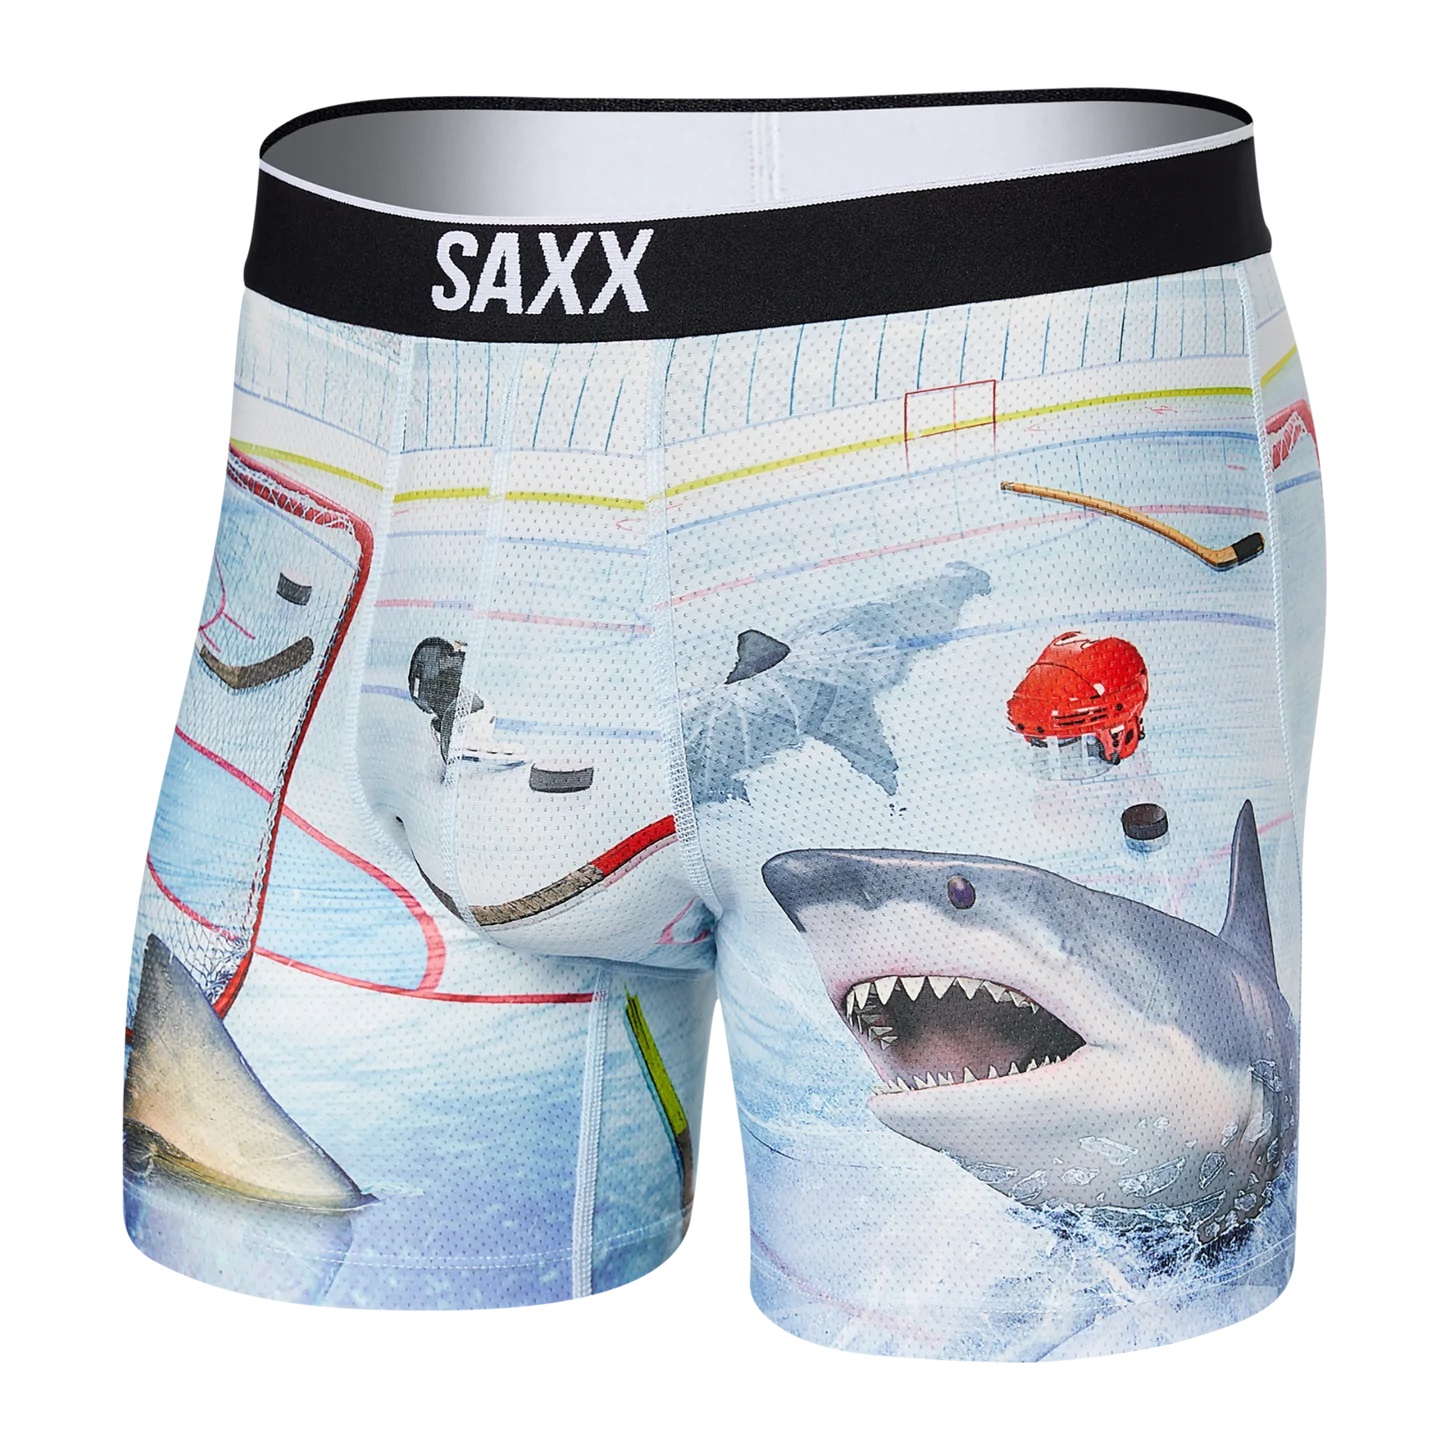 Saxx Men's Underwear - Volt Breathable Mesh Boxer Brief with Built